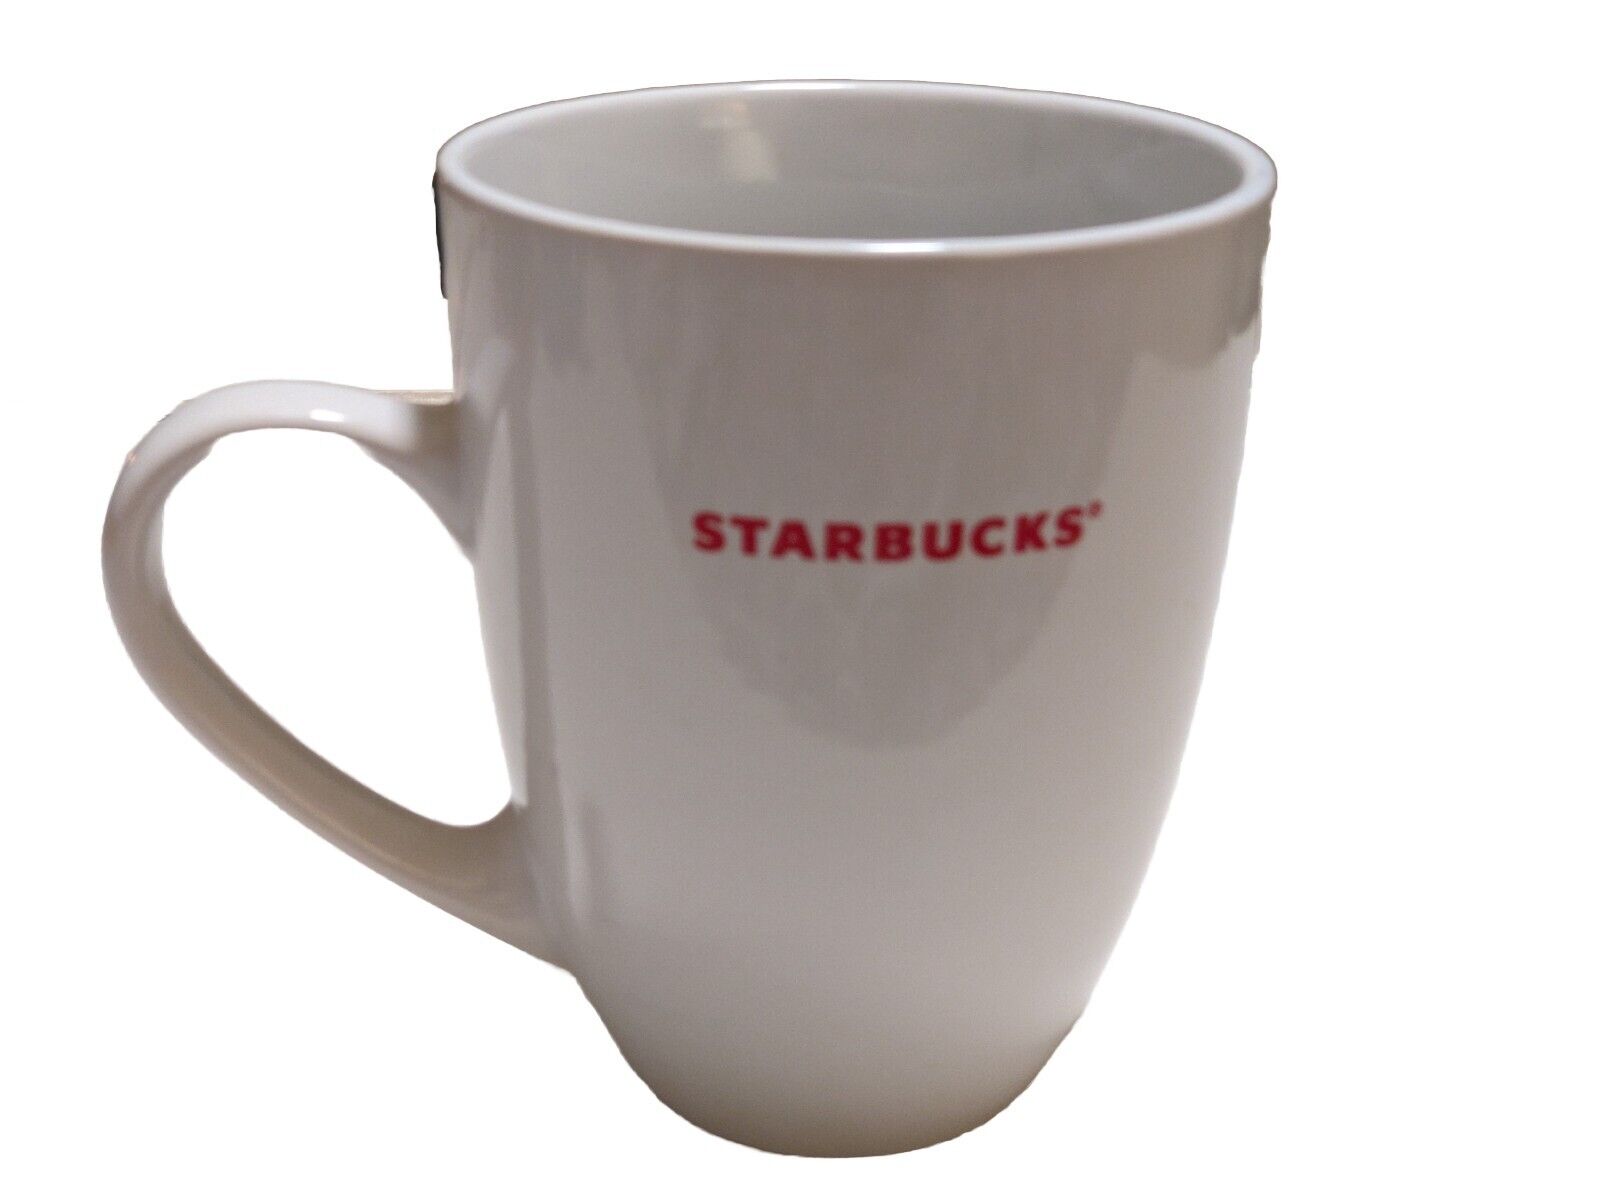 Starbucks 2008 Barista Coffee Cup 15 oz Mug White With Red Logo 